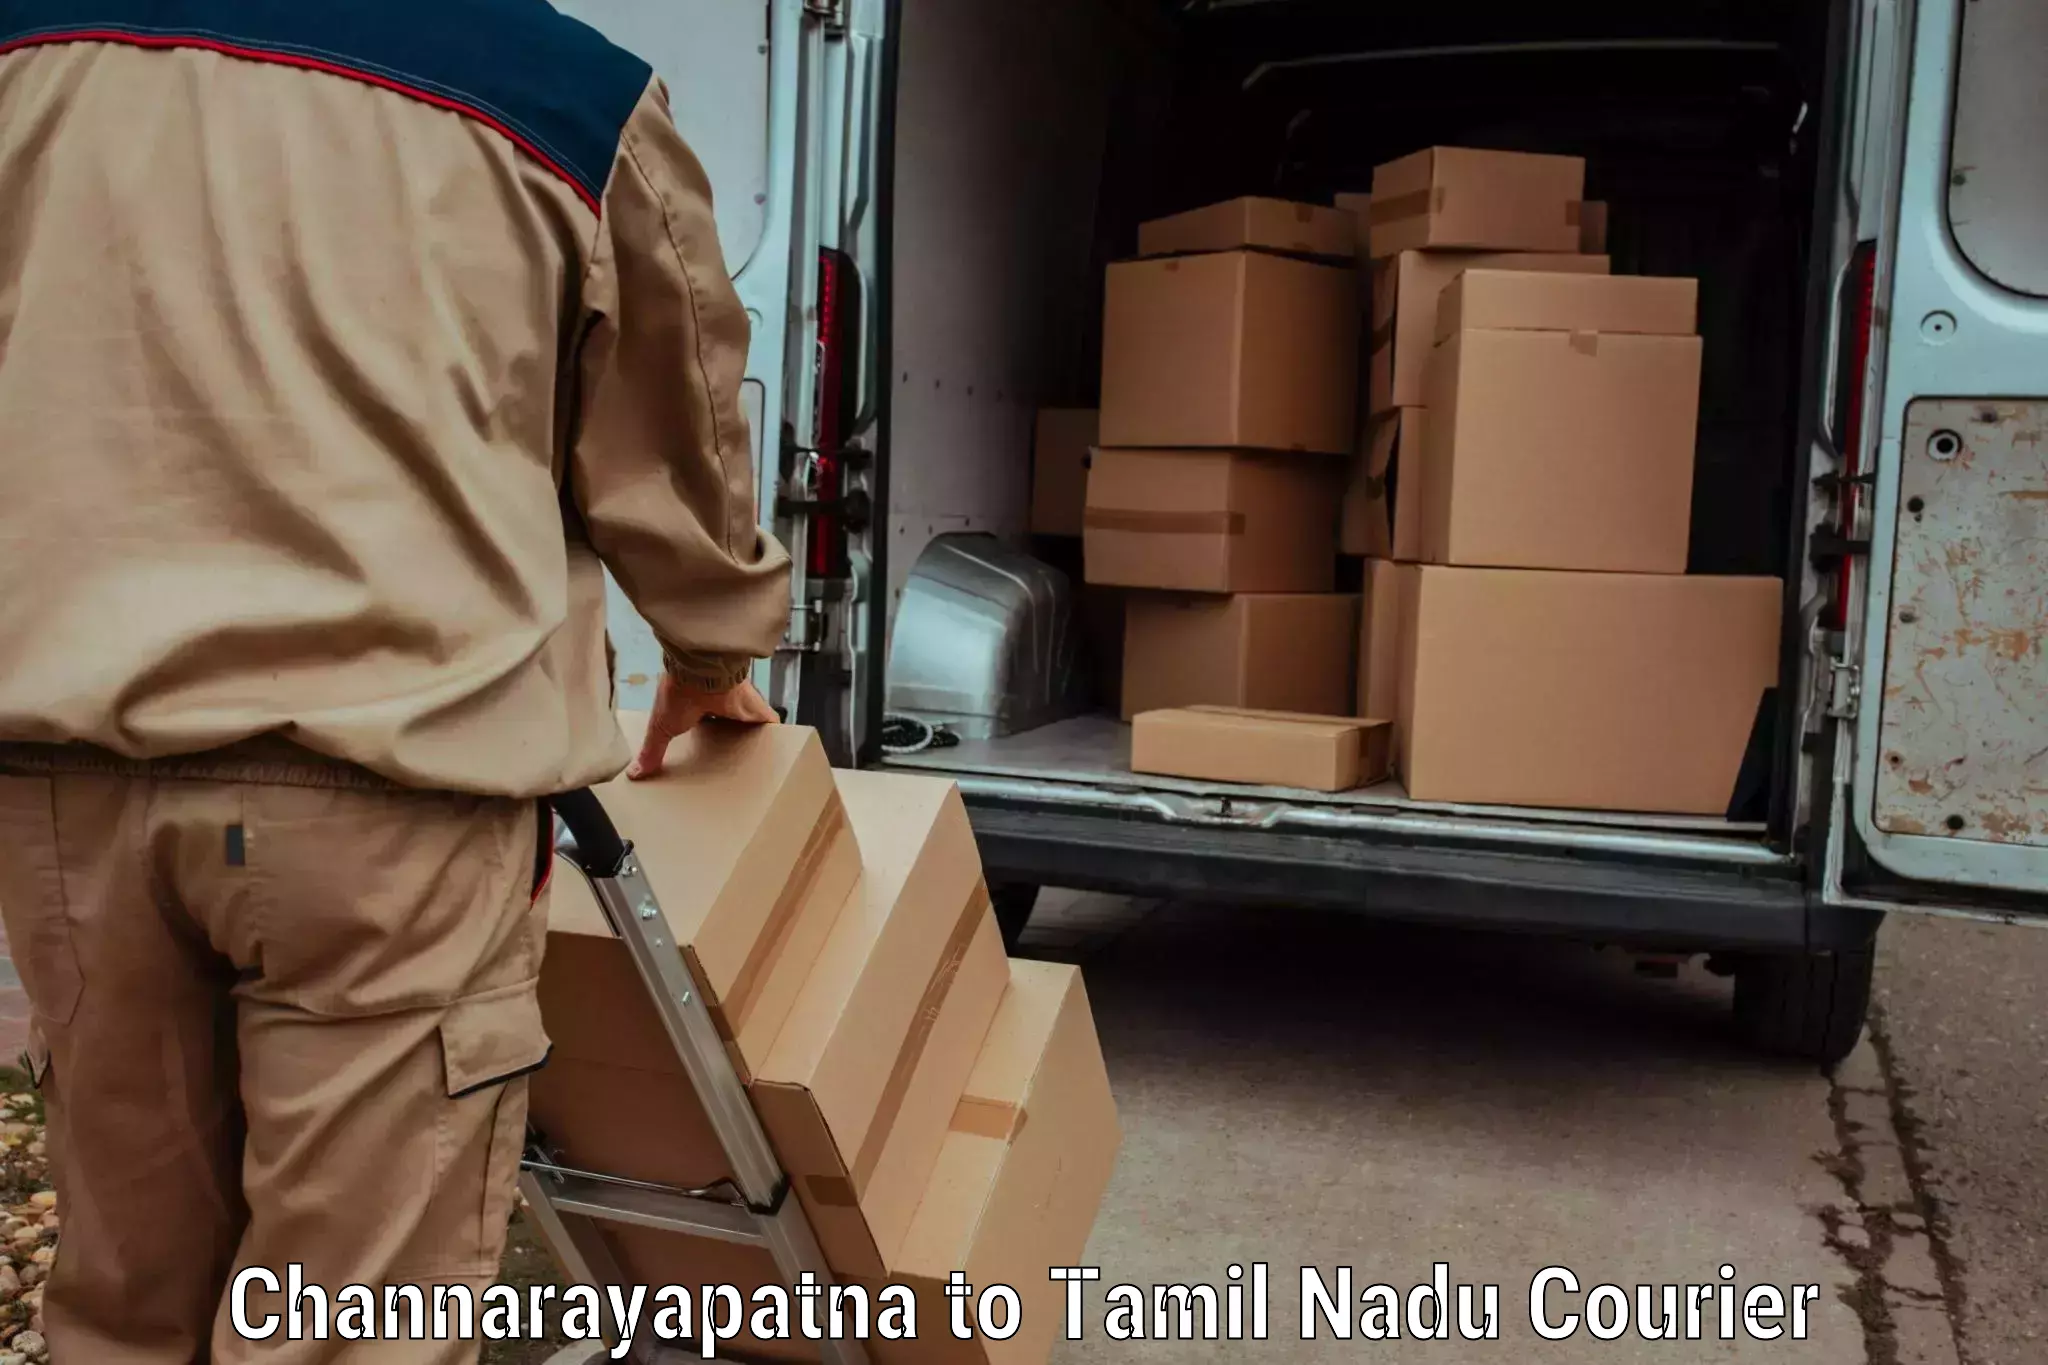 Reliable shipping partners Channarayapatna to Vadipatti